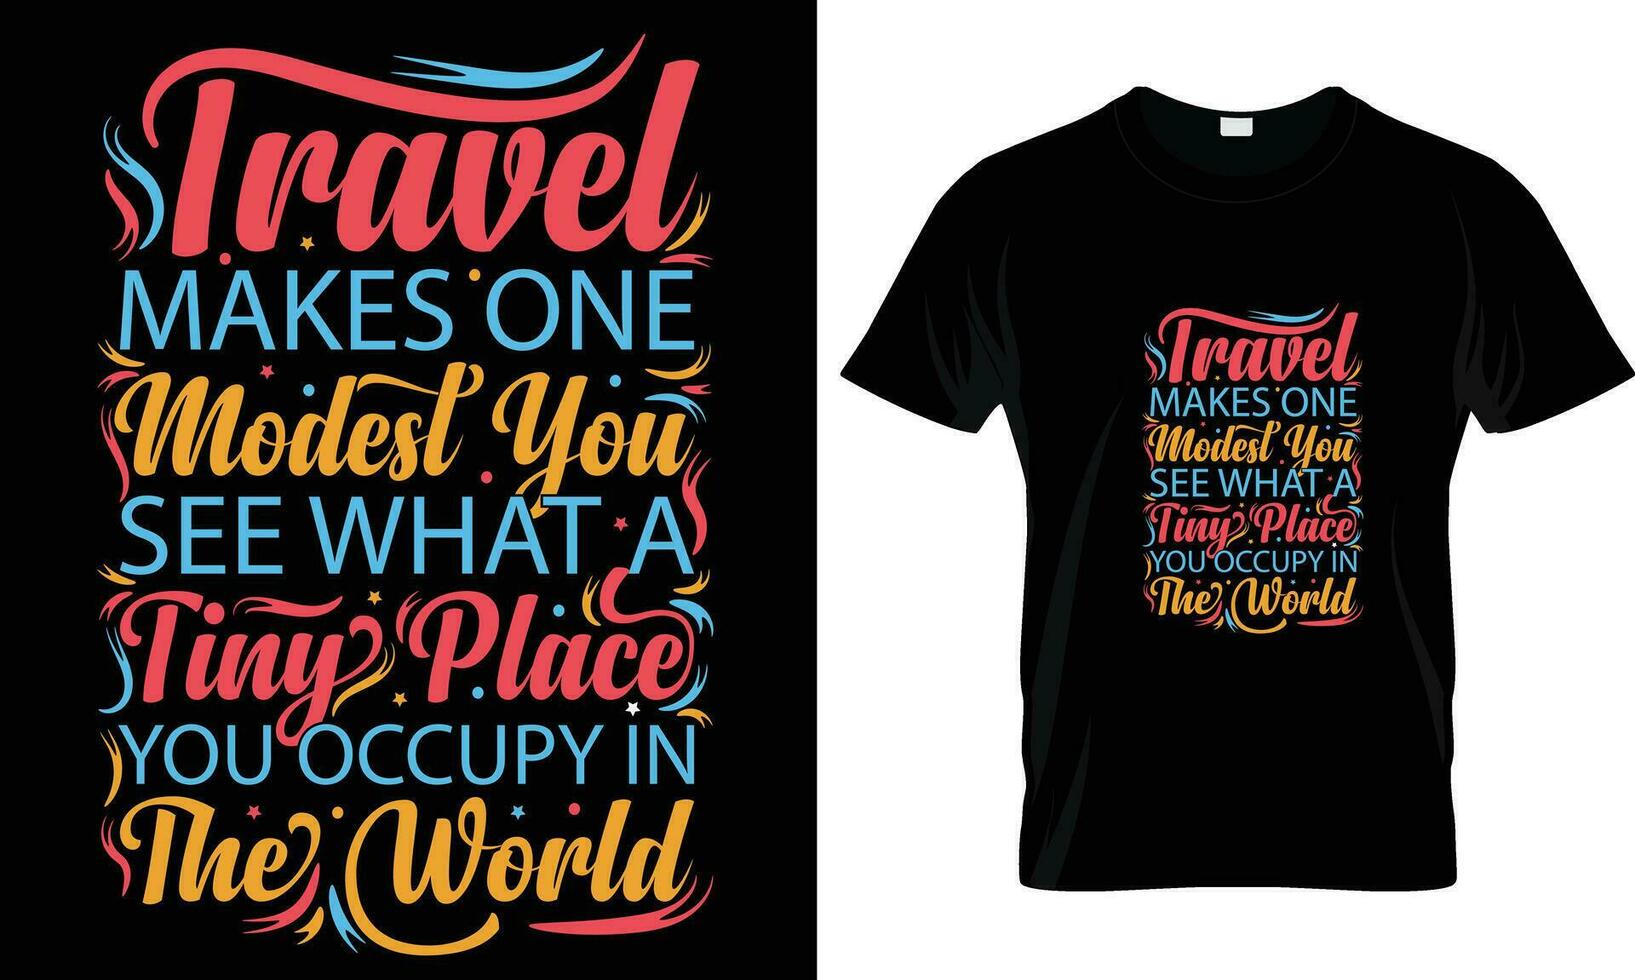 Travel t shirt design vector. vector